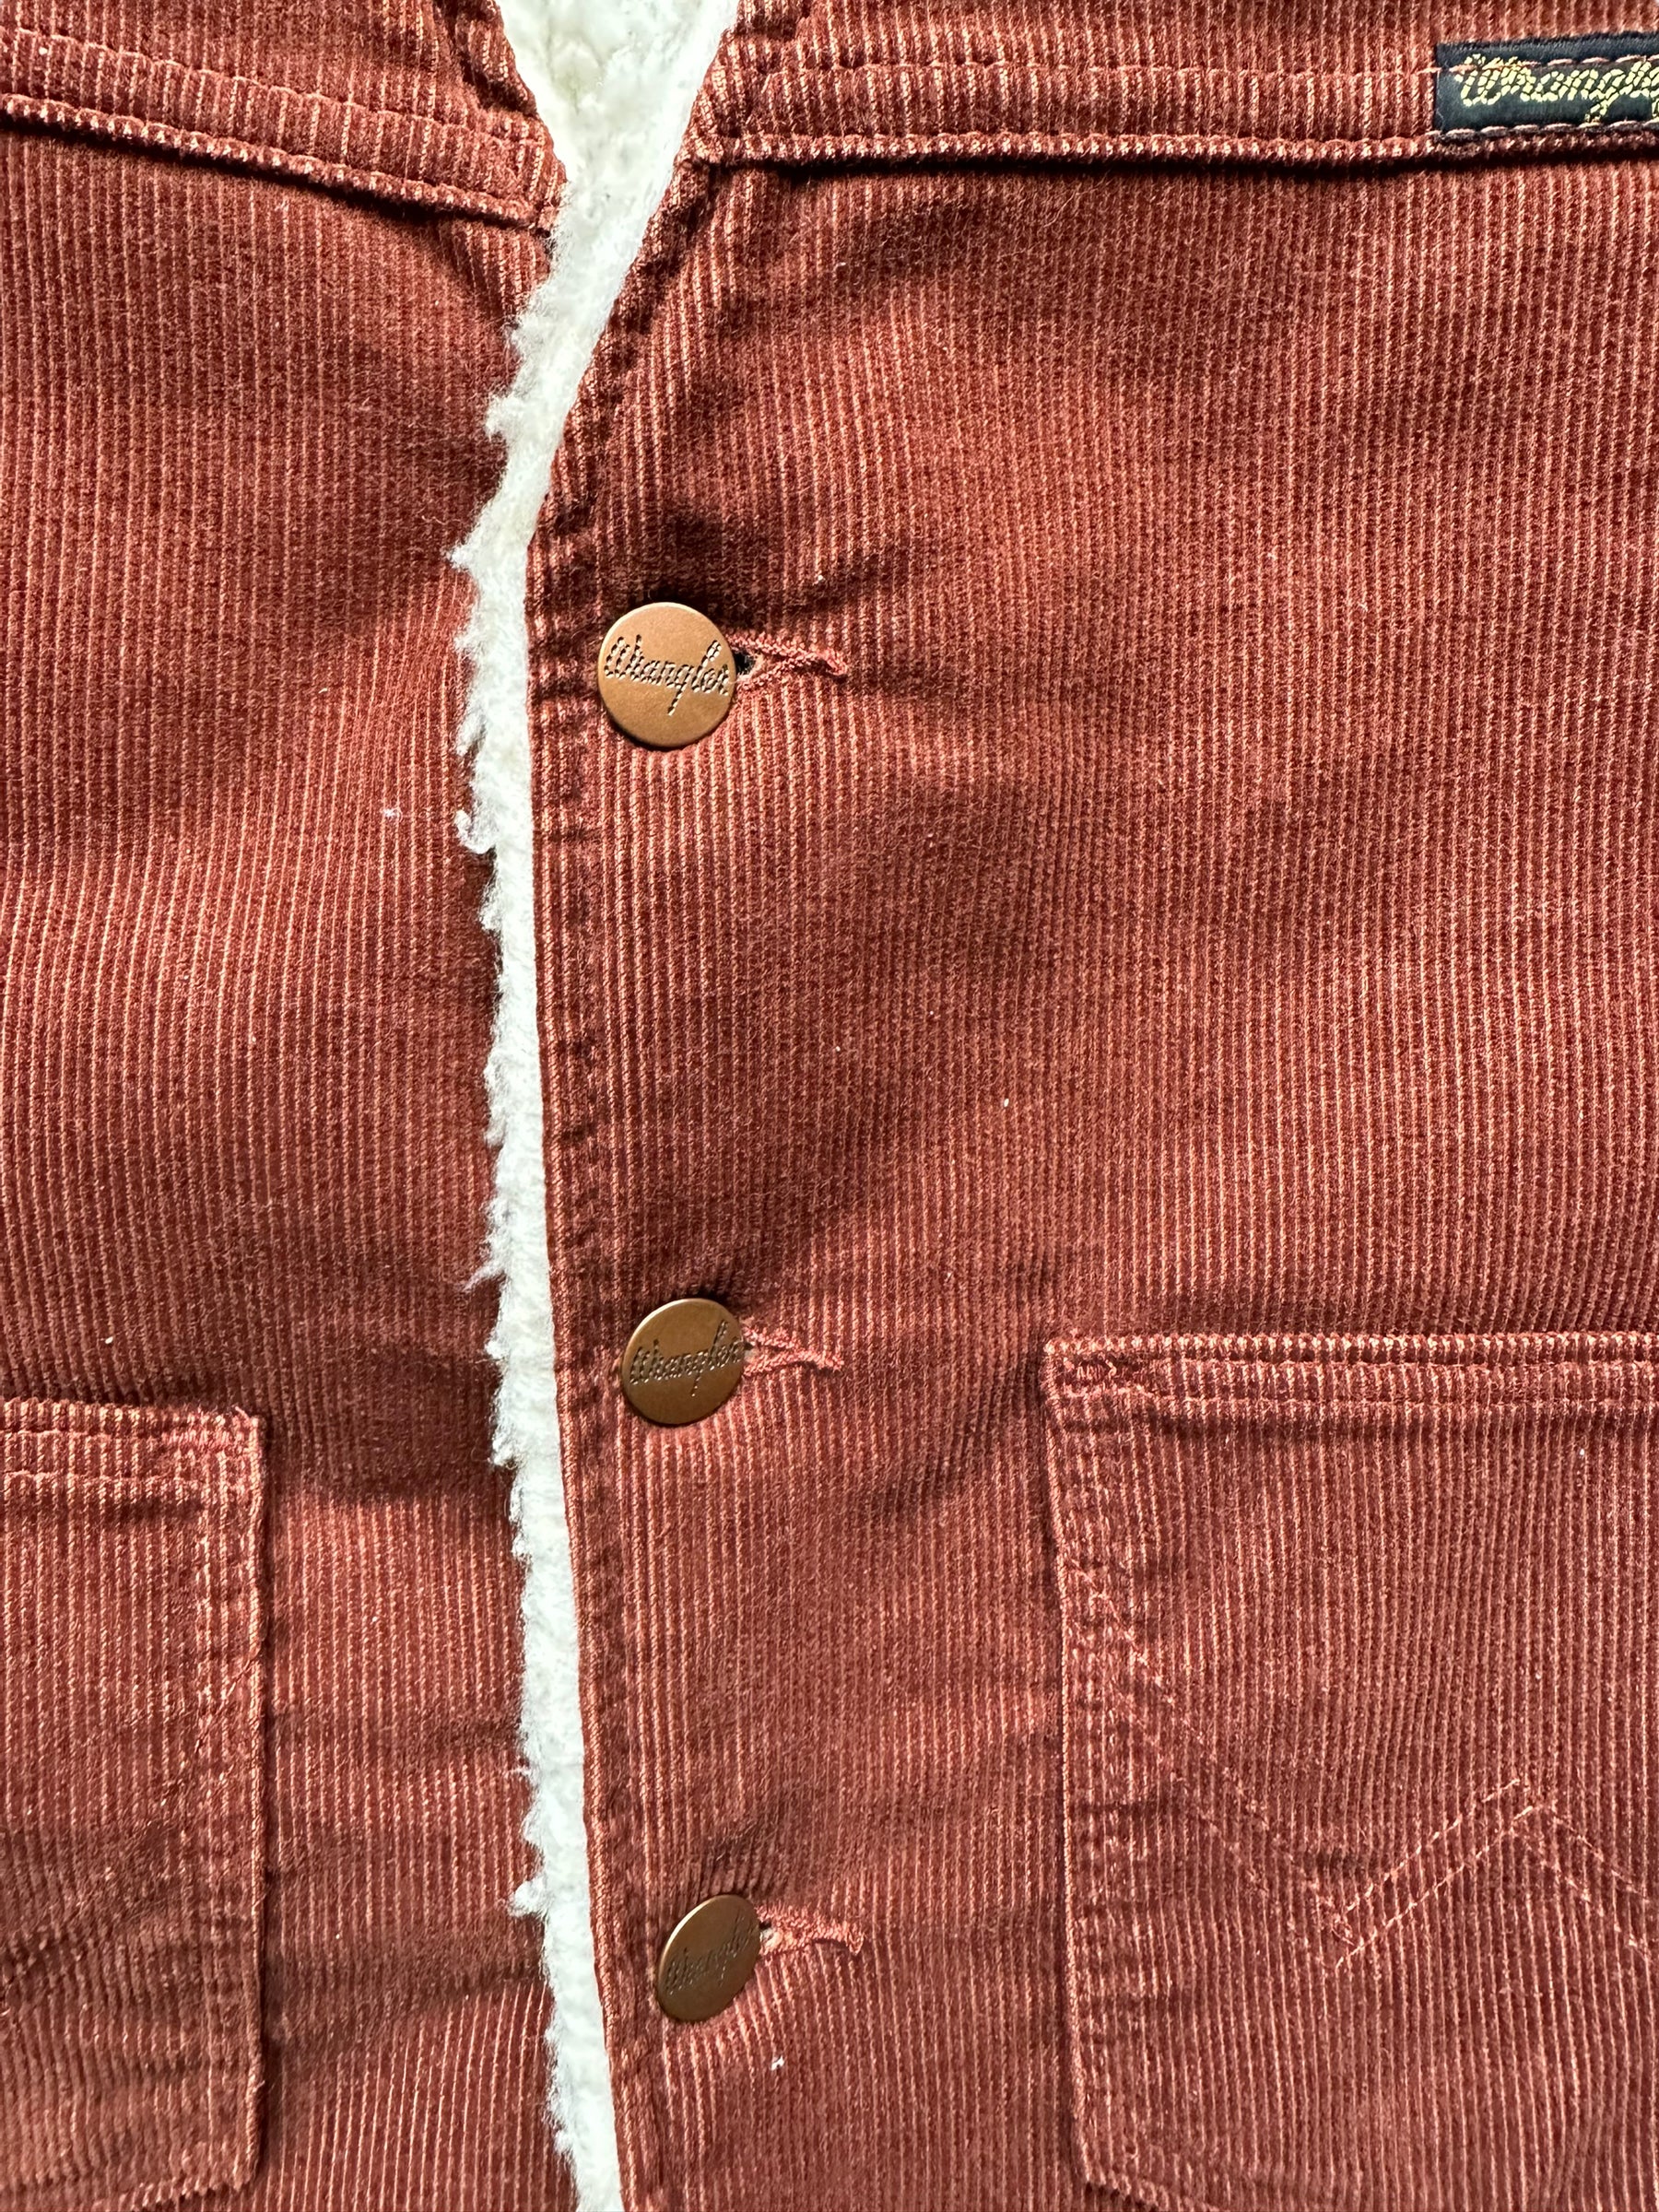 Button View of Vintage Rust Colored Wrangler Shearling Vest SZ M | Vintage Sherpa Vest Seattle | Barn Owl Vintage Seattle